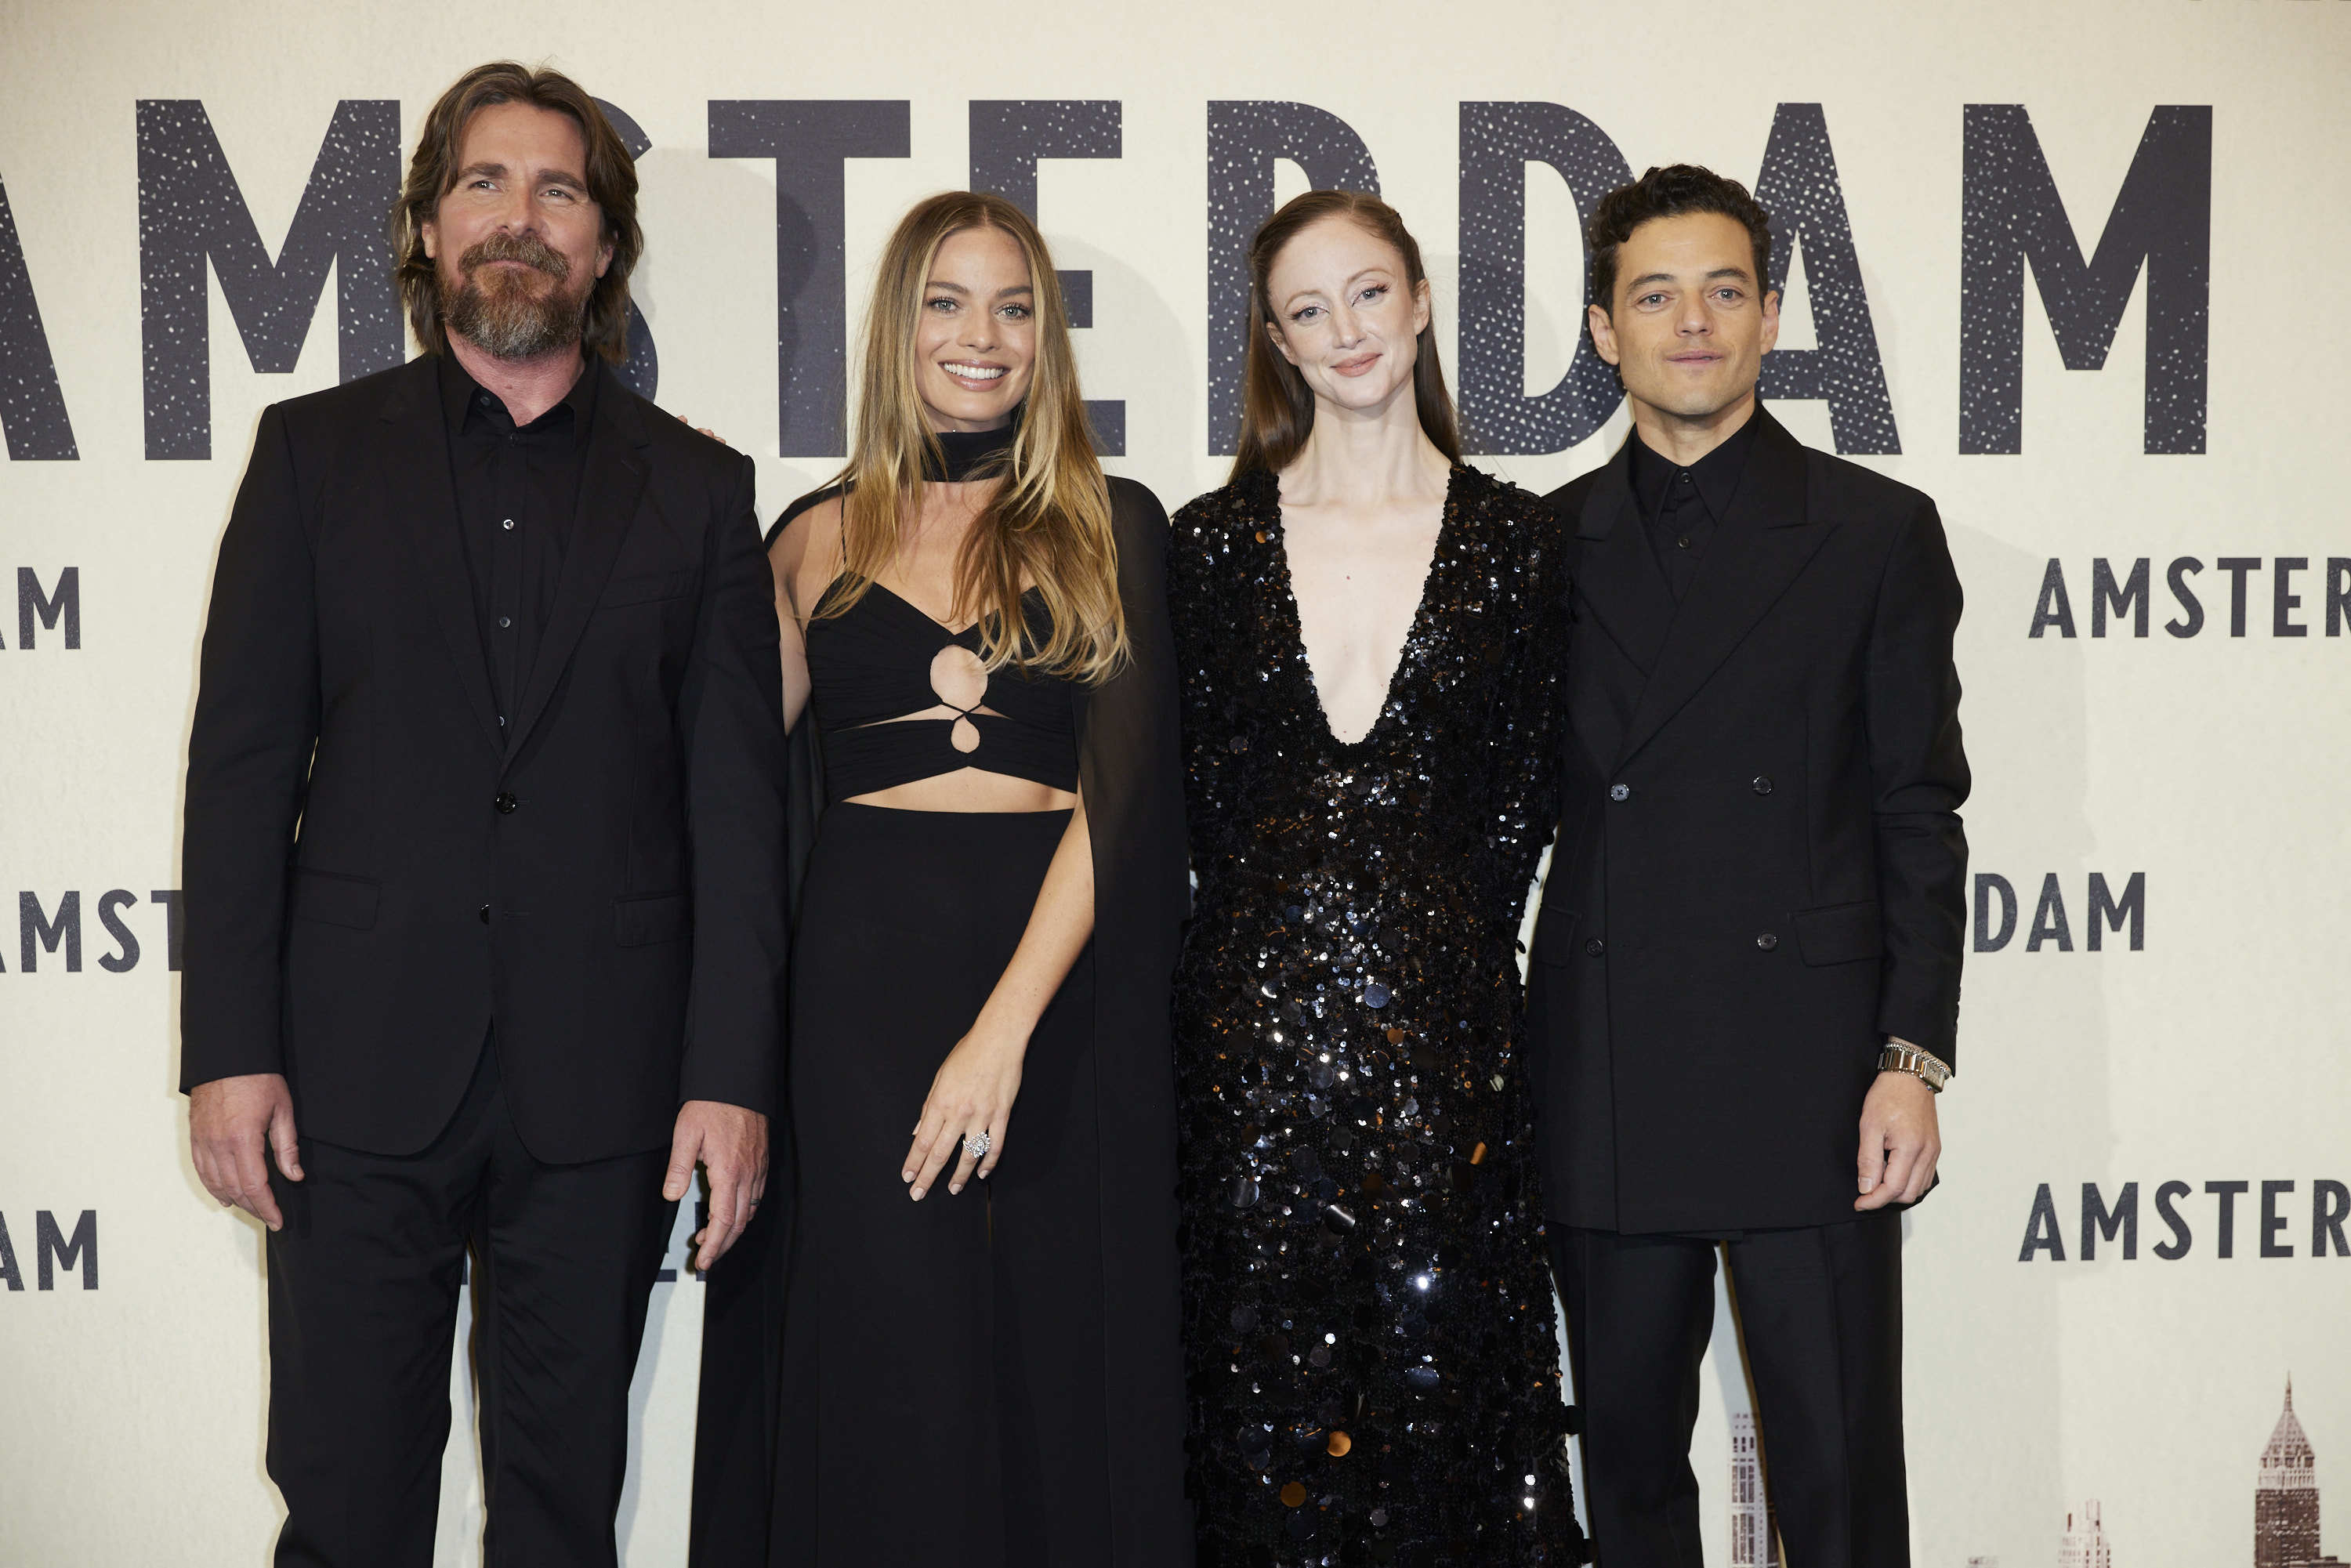 Christian Bale, Margot Robbie, Andrea Riseborough and Rami Malek.